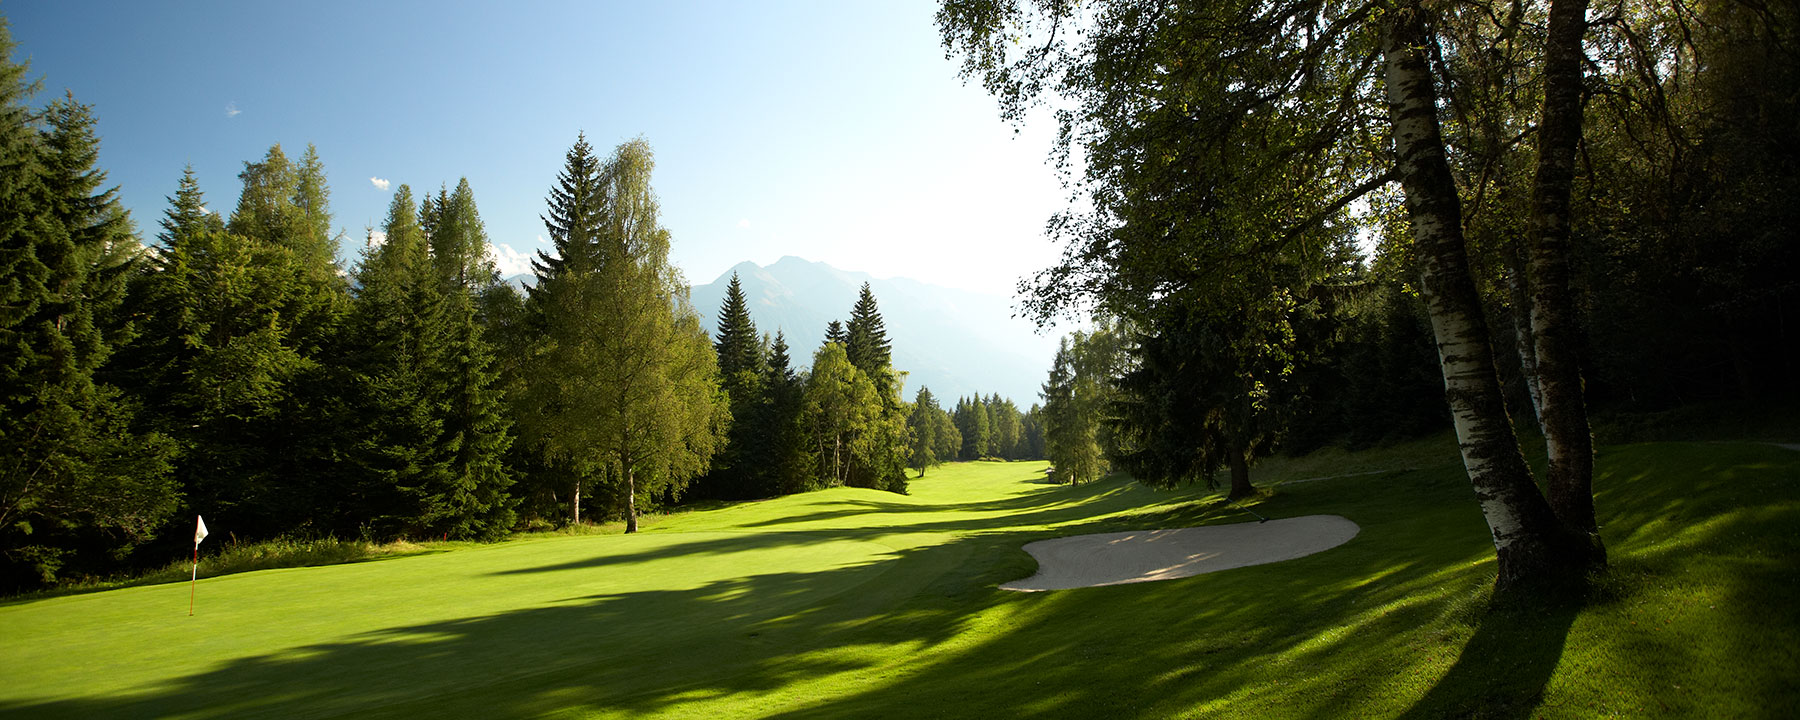 Golfherz Tirol - Golfen im Herzen Tirols